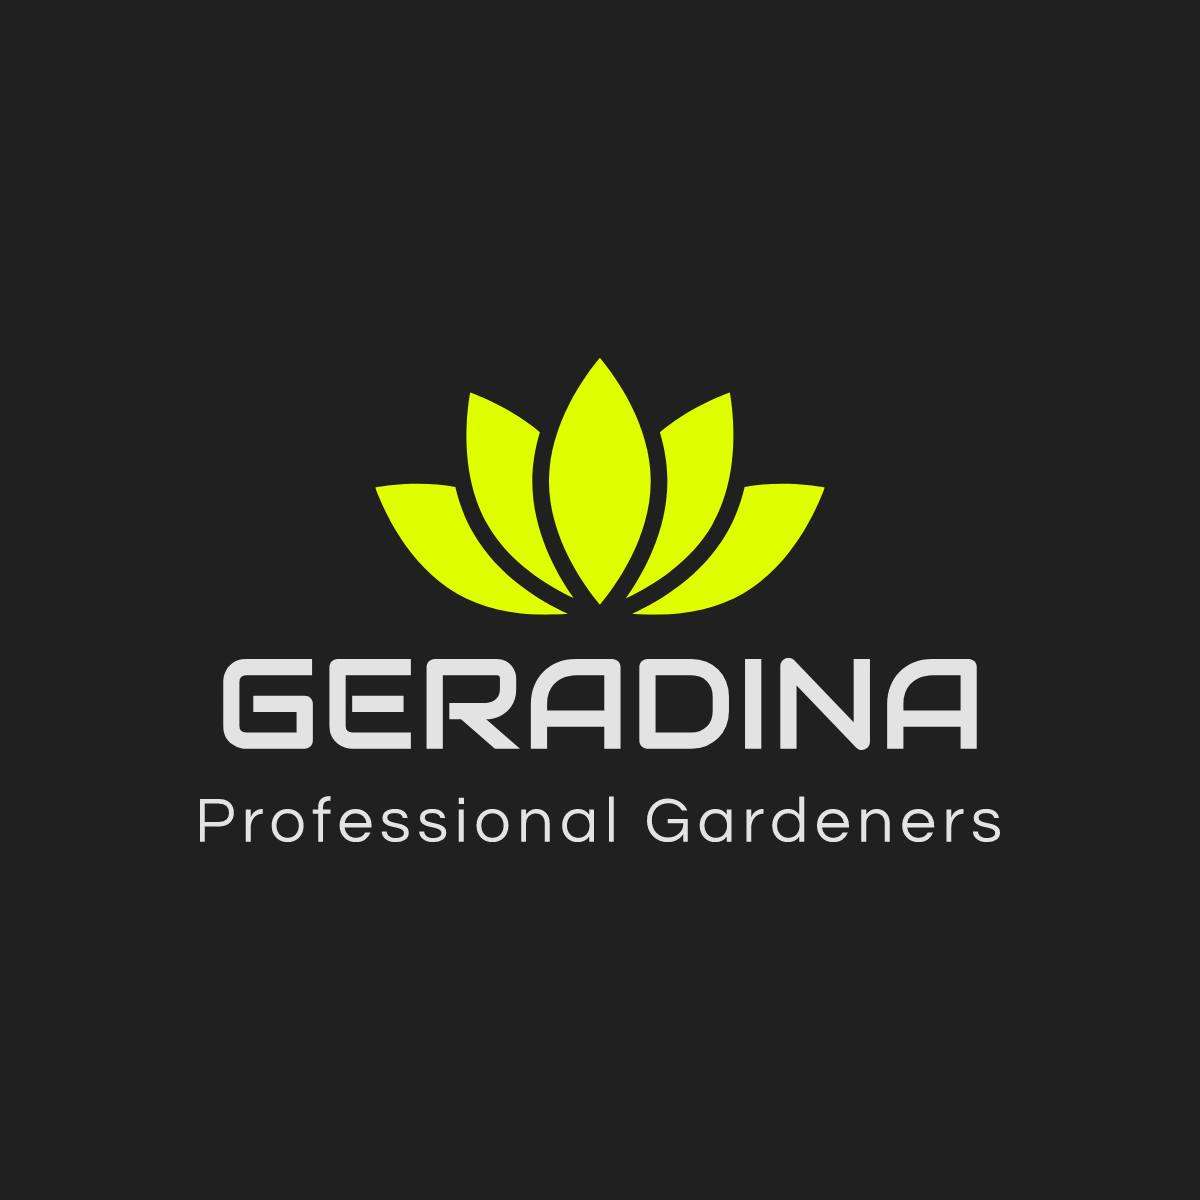 Geradina Professional Gardeners Logo